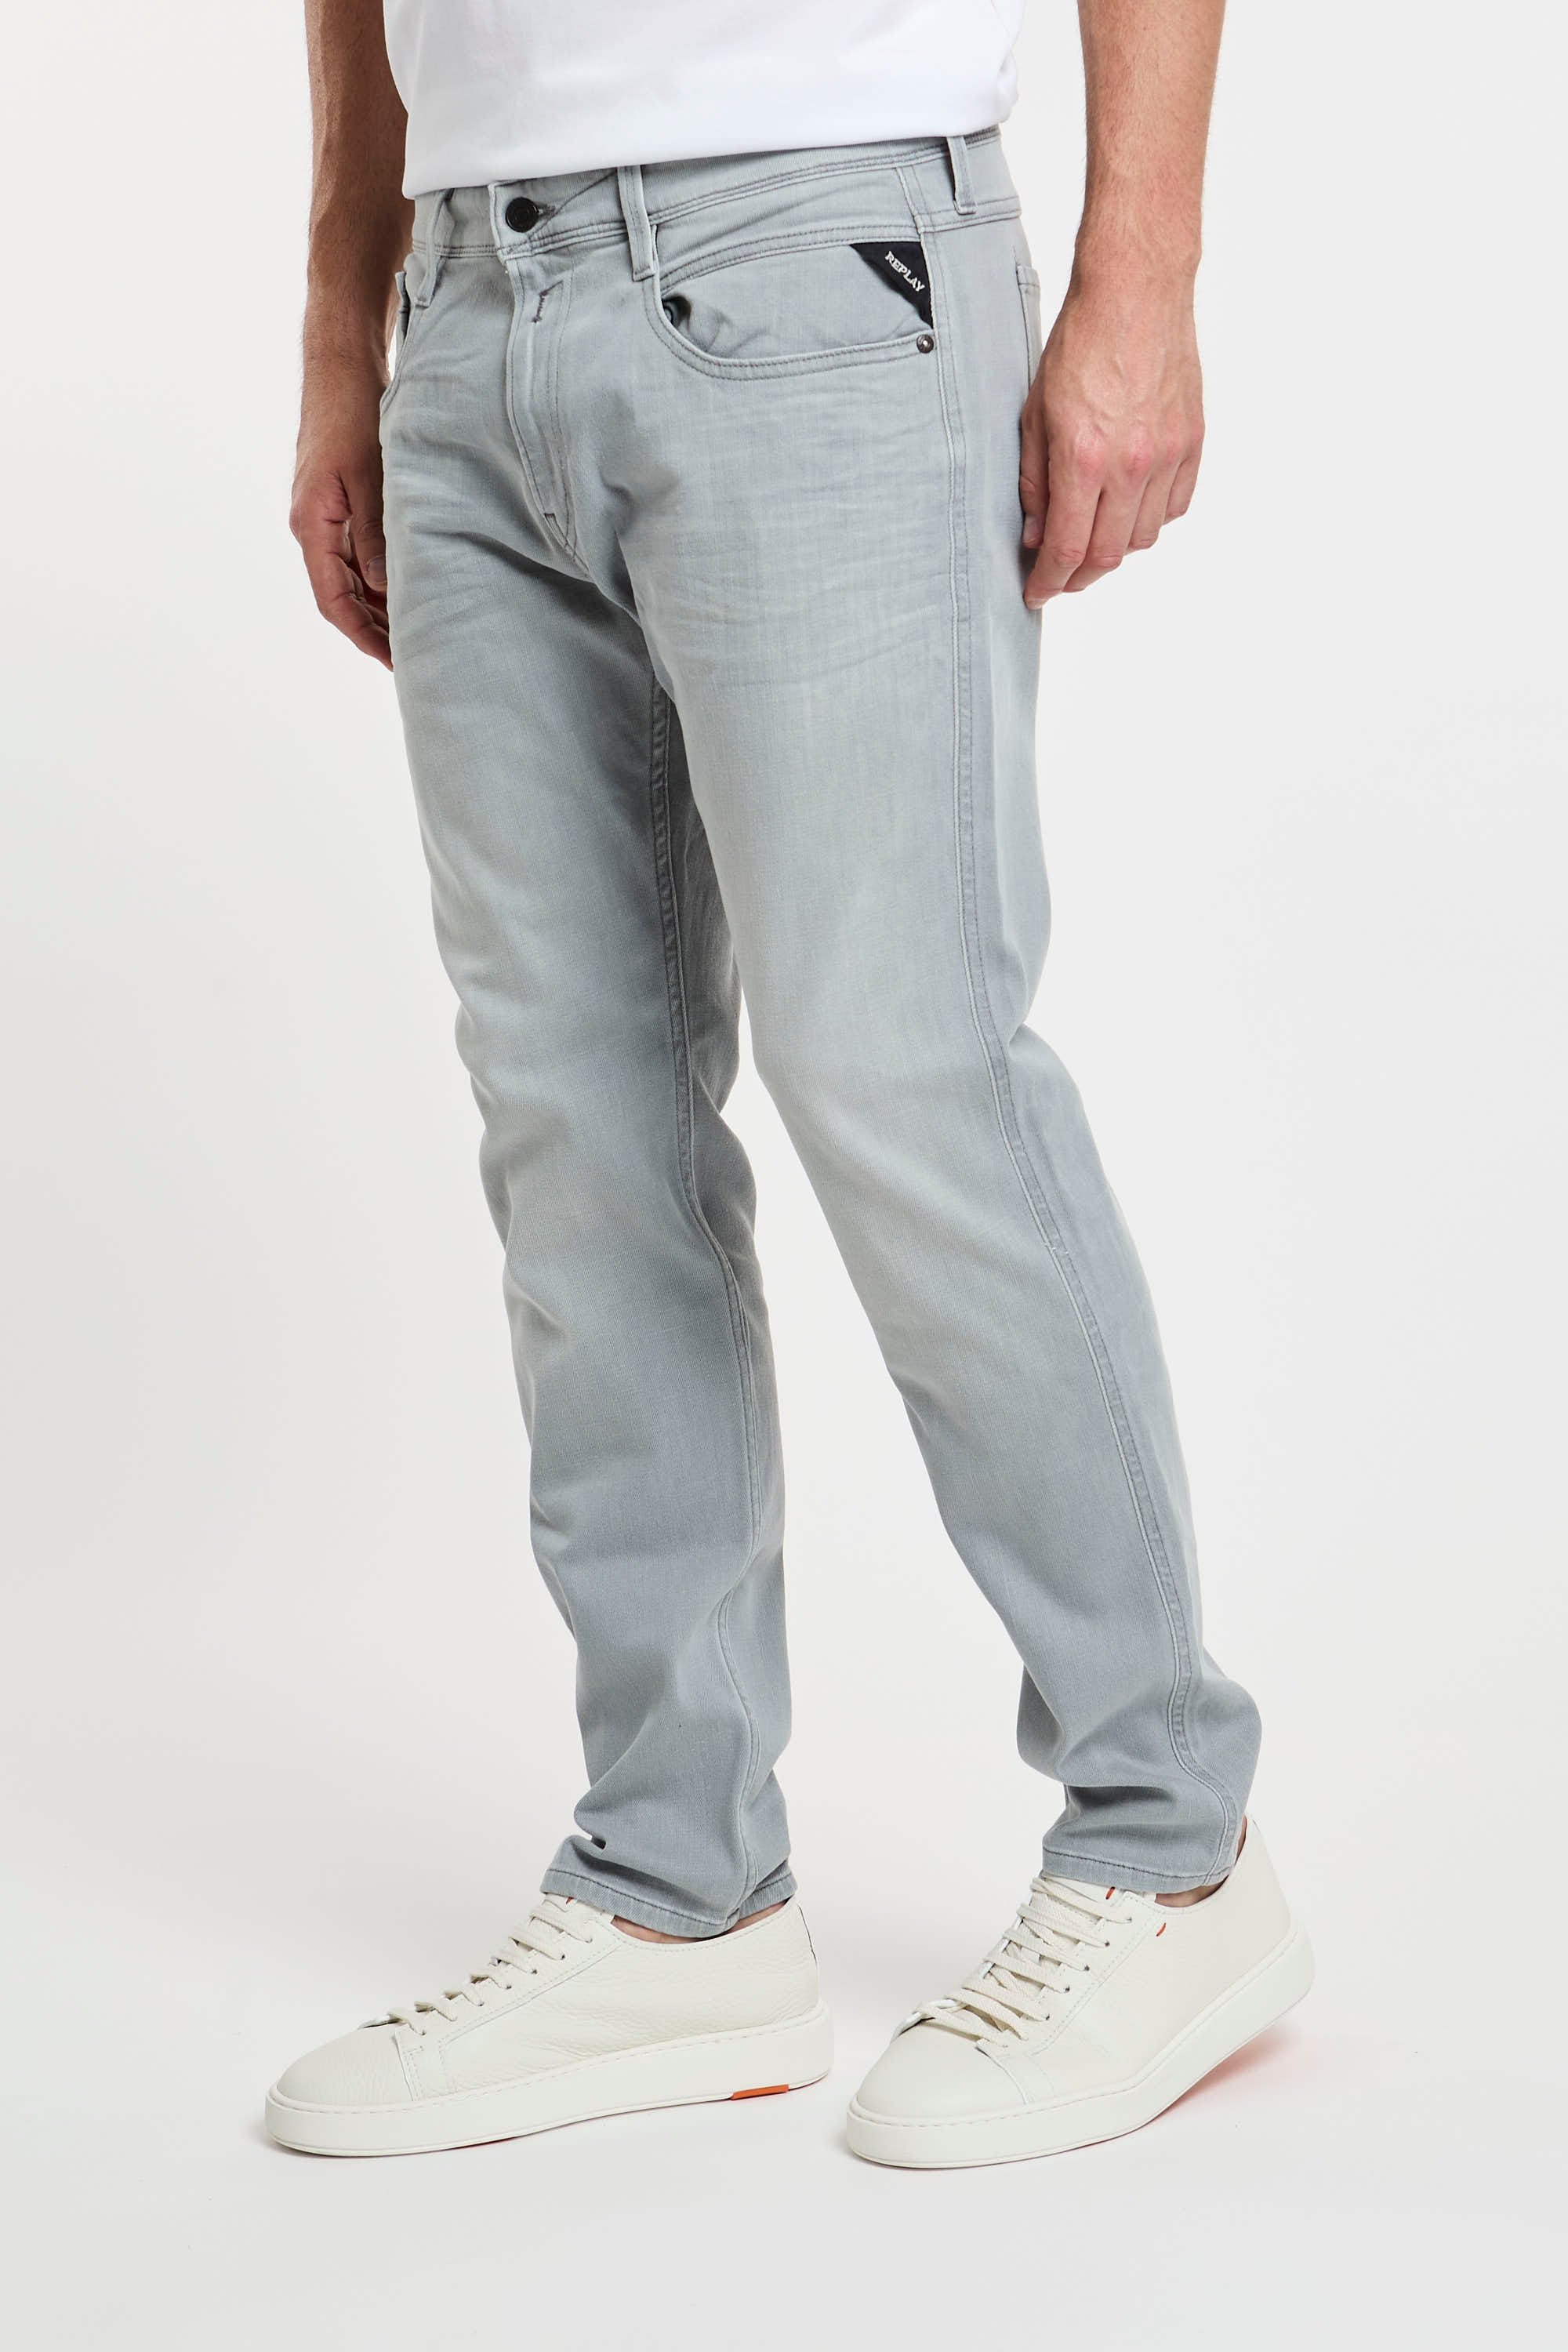 Replay Jeans Slim Fit Anbass aus Baumwolle/Elasthan in Hellgrau-1